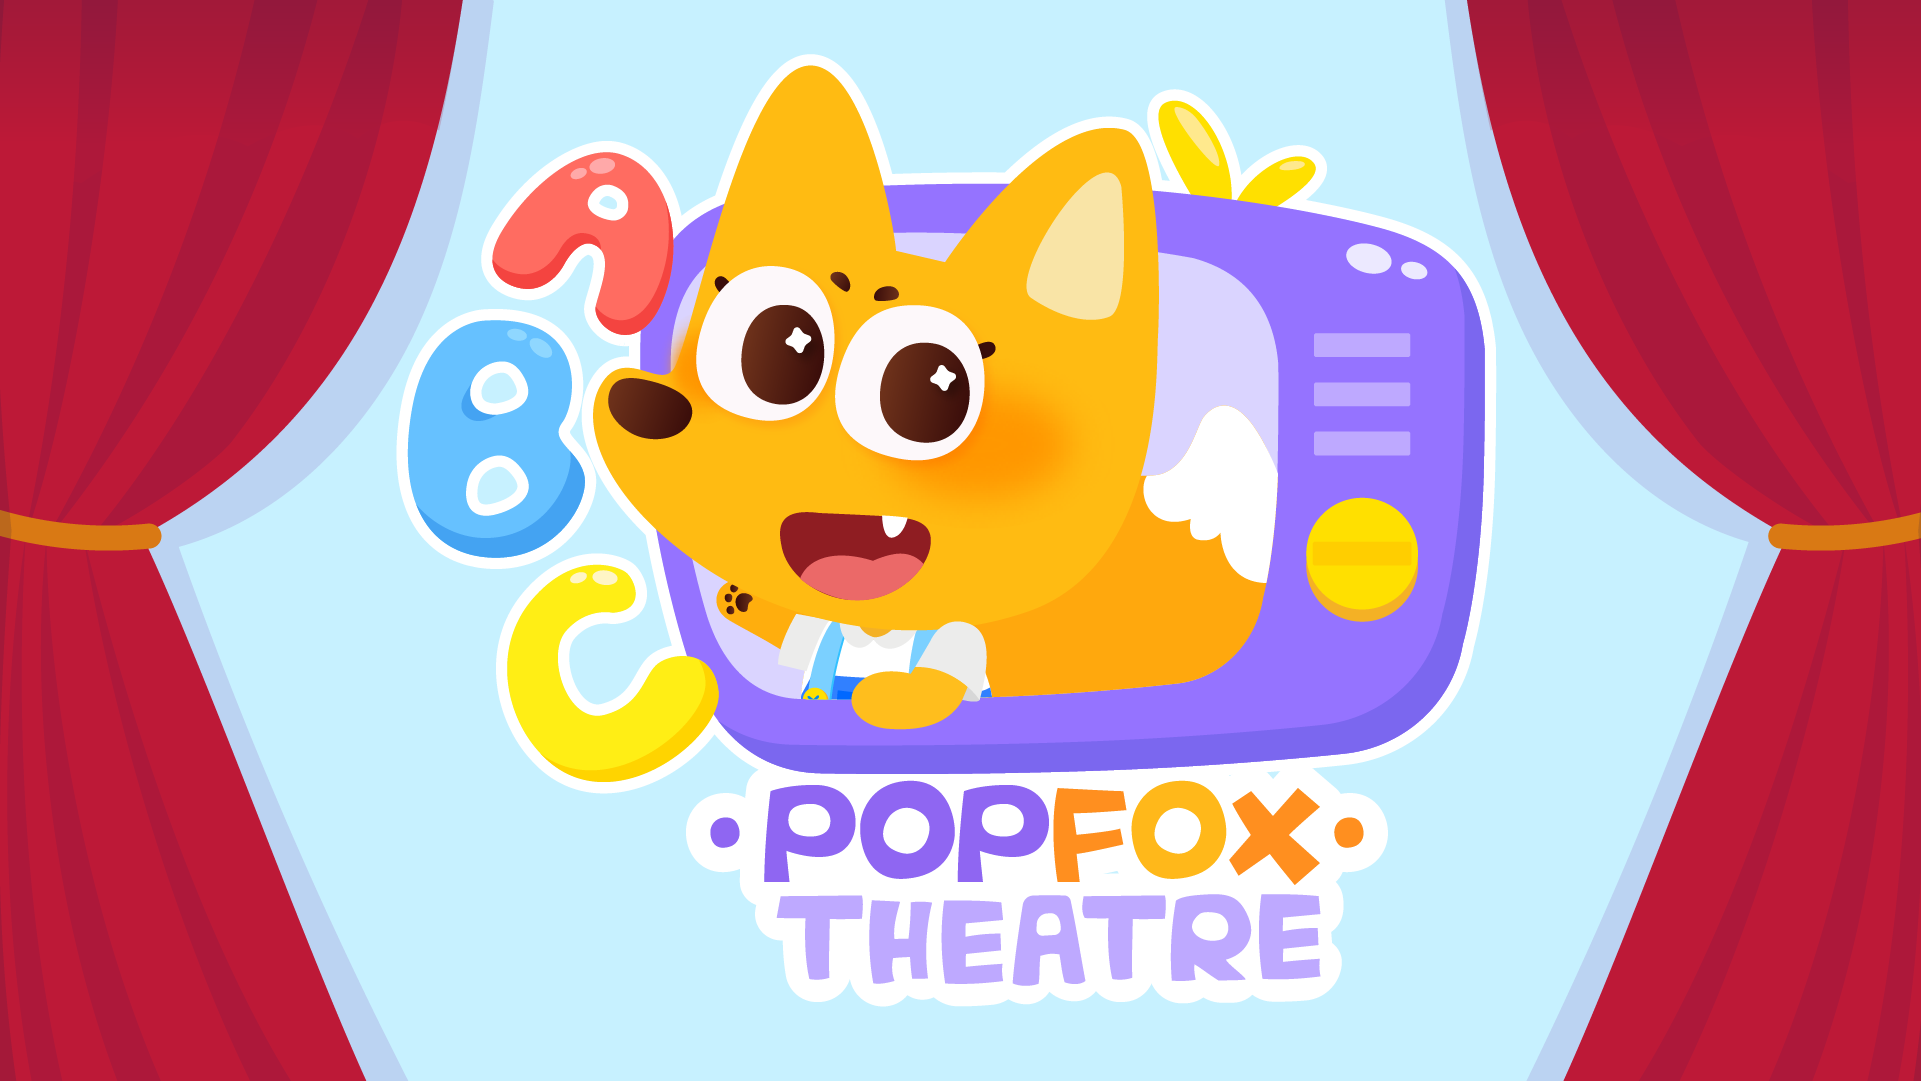 Pop Fox Theatre